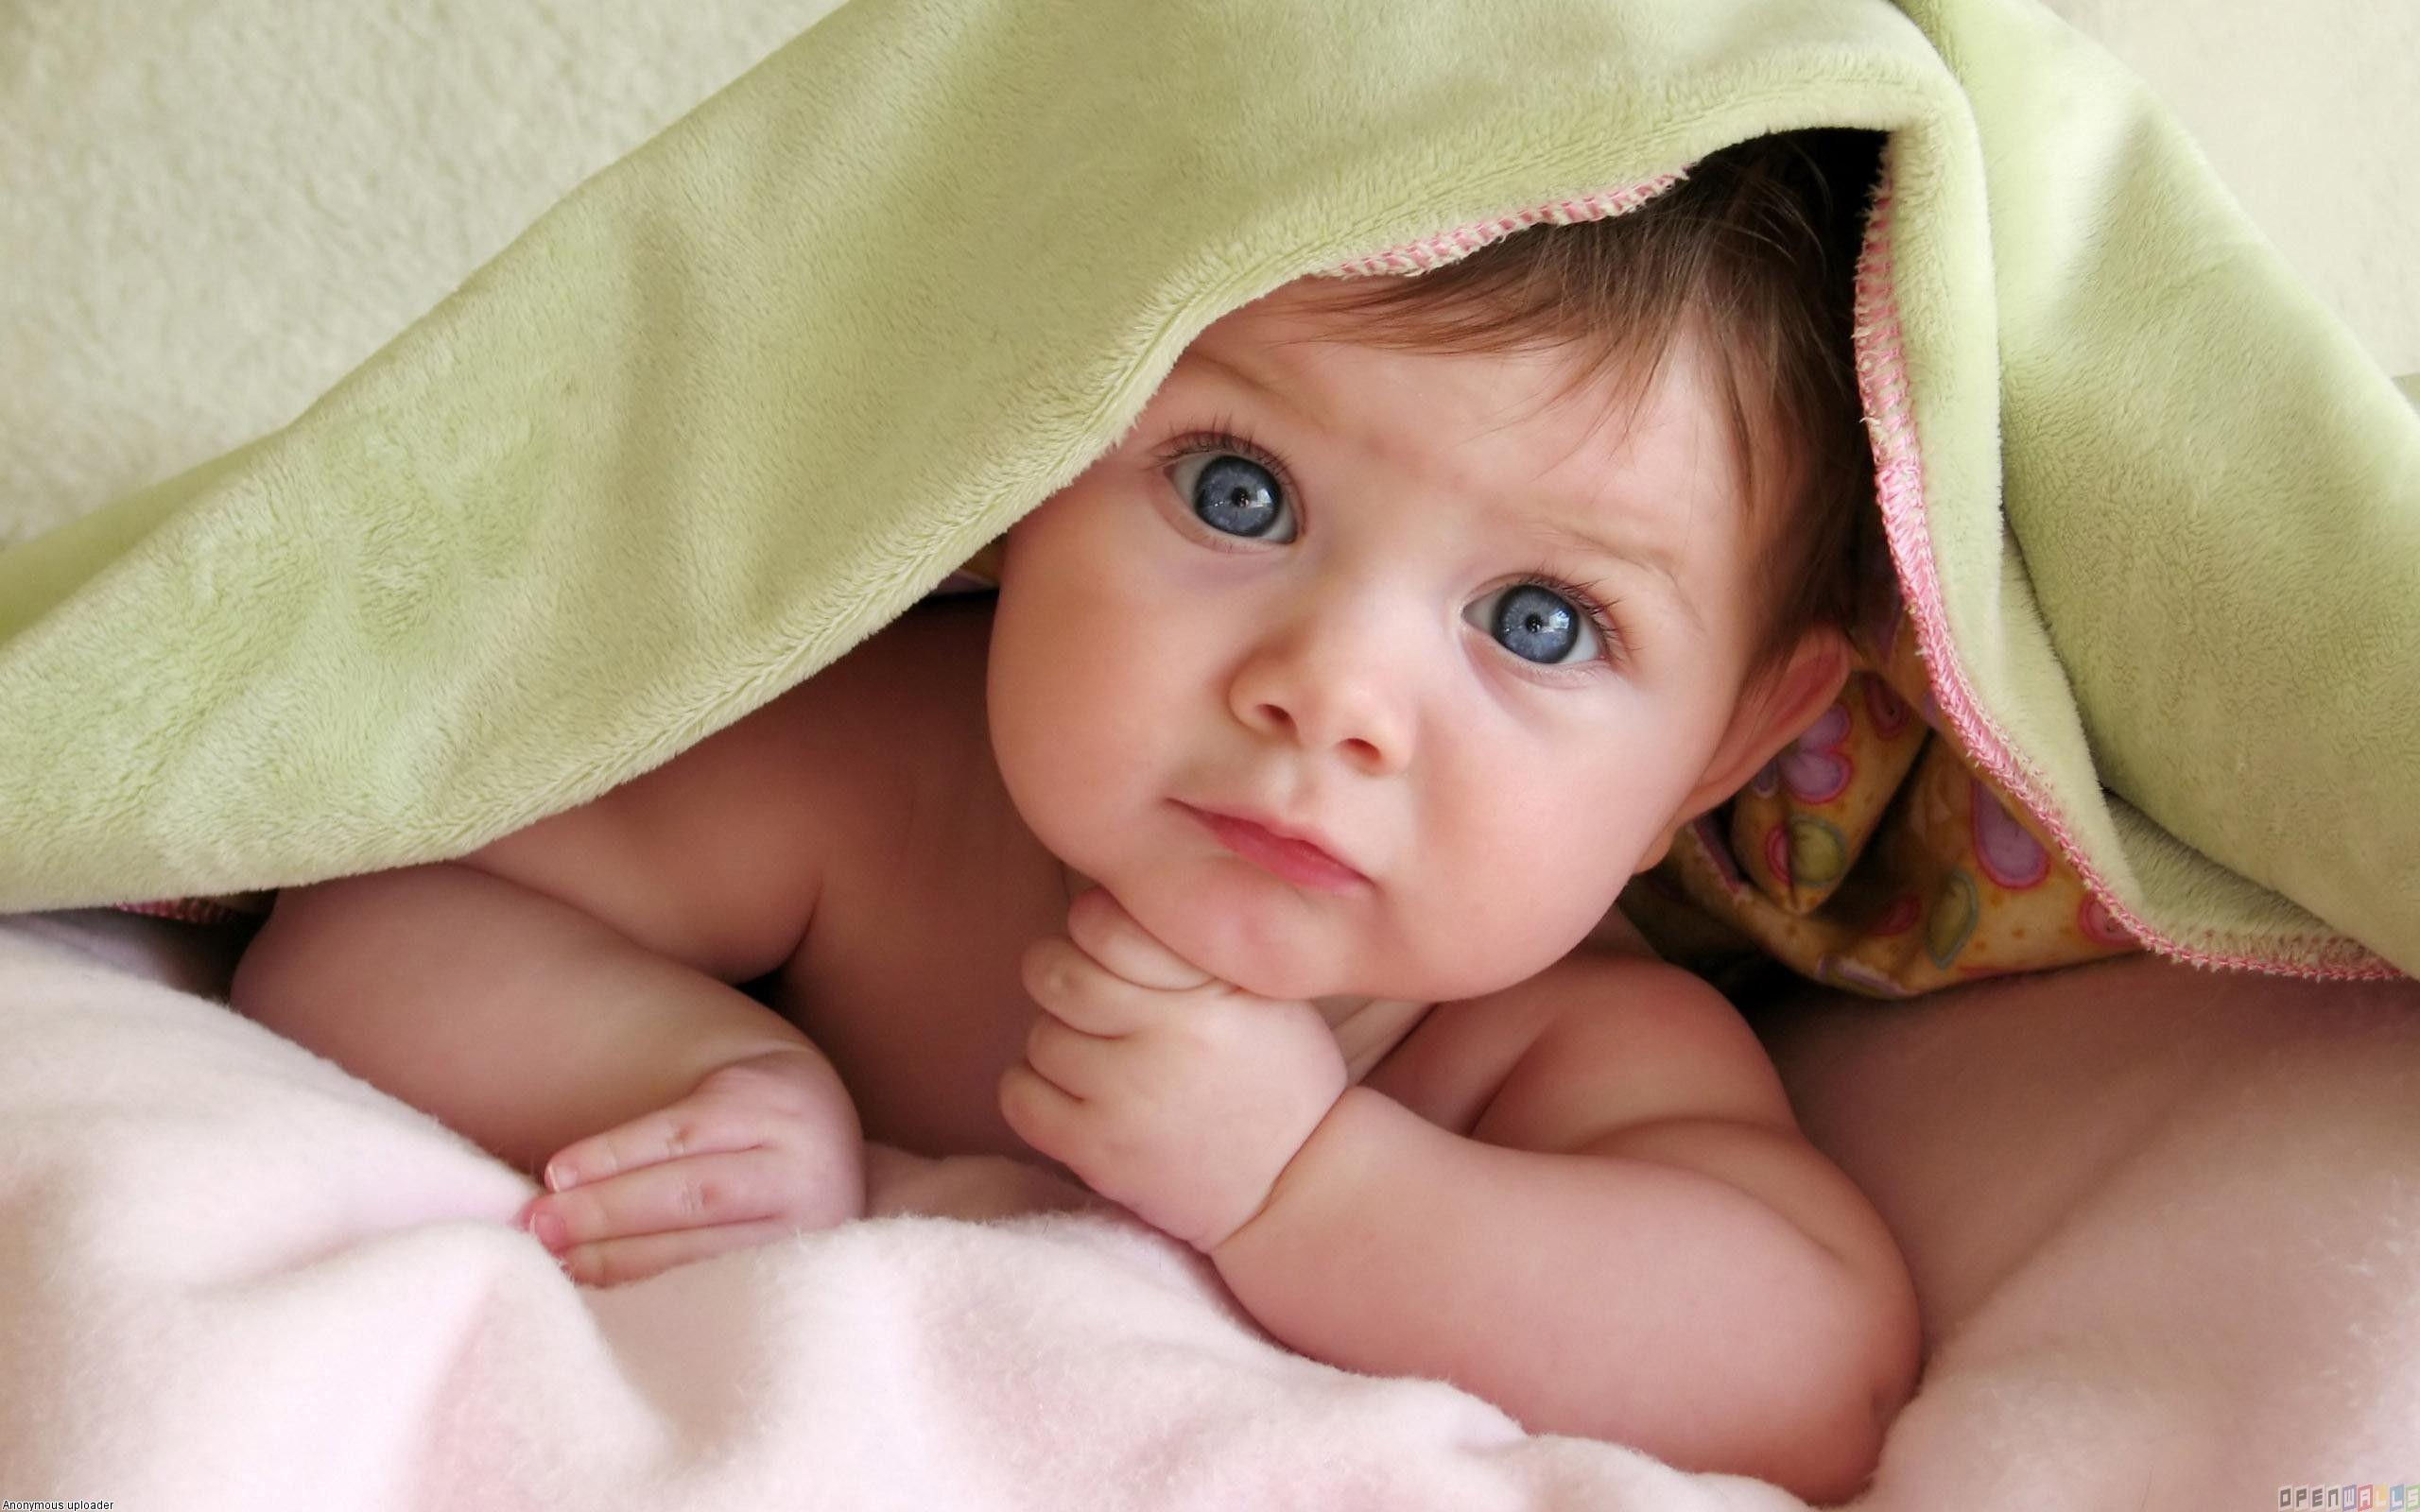 Cute Baby Wallpapers - Top Free Cute